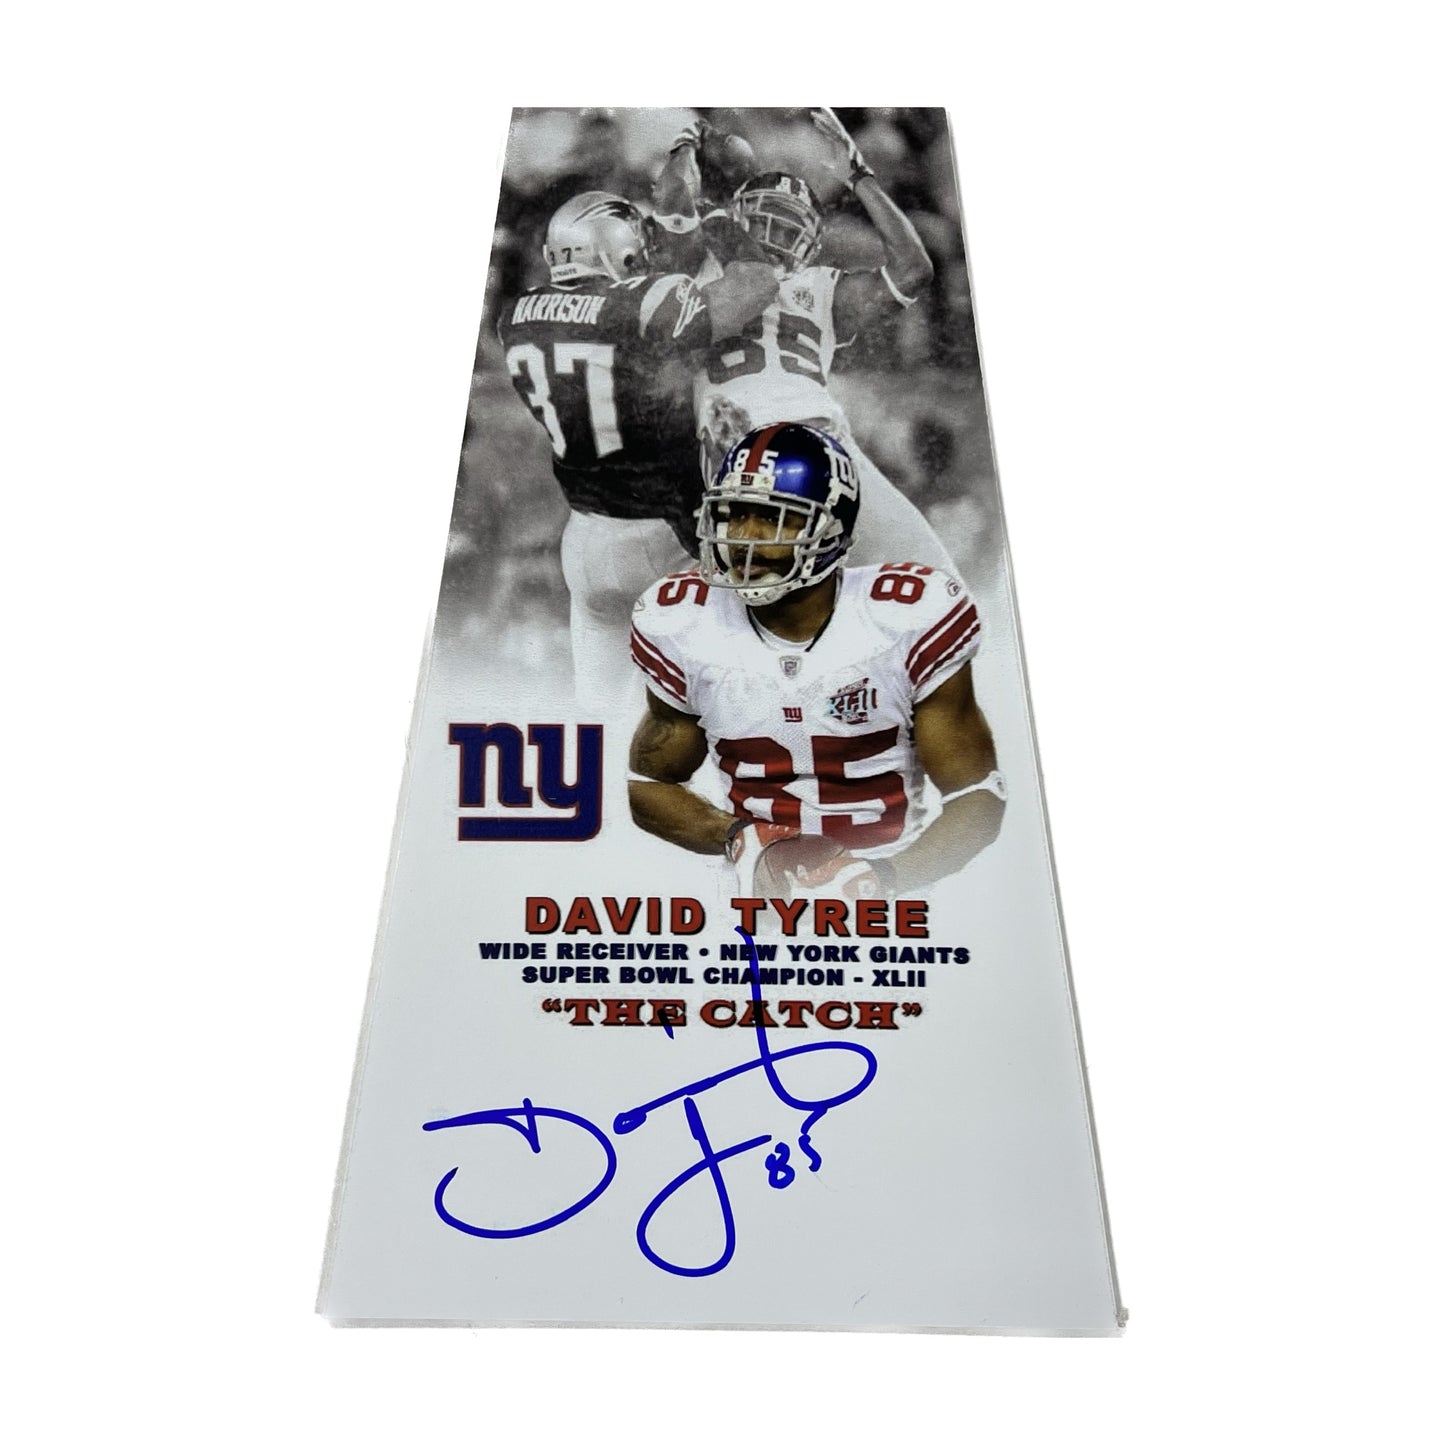 David Tyree Autographed New York Giants Super Bowl Trophy Plaque